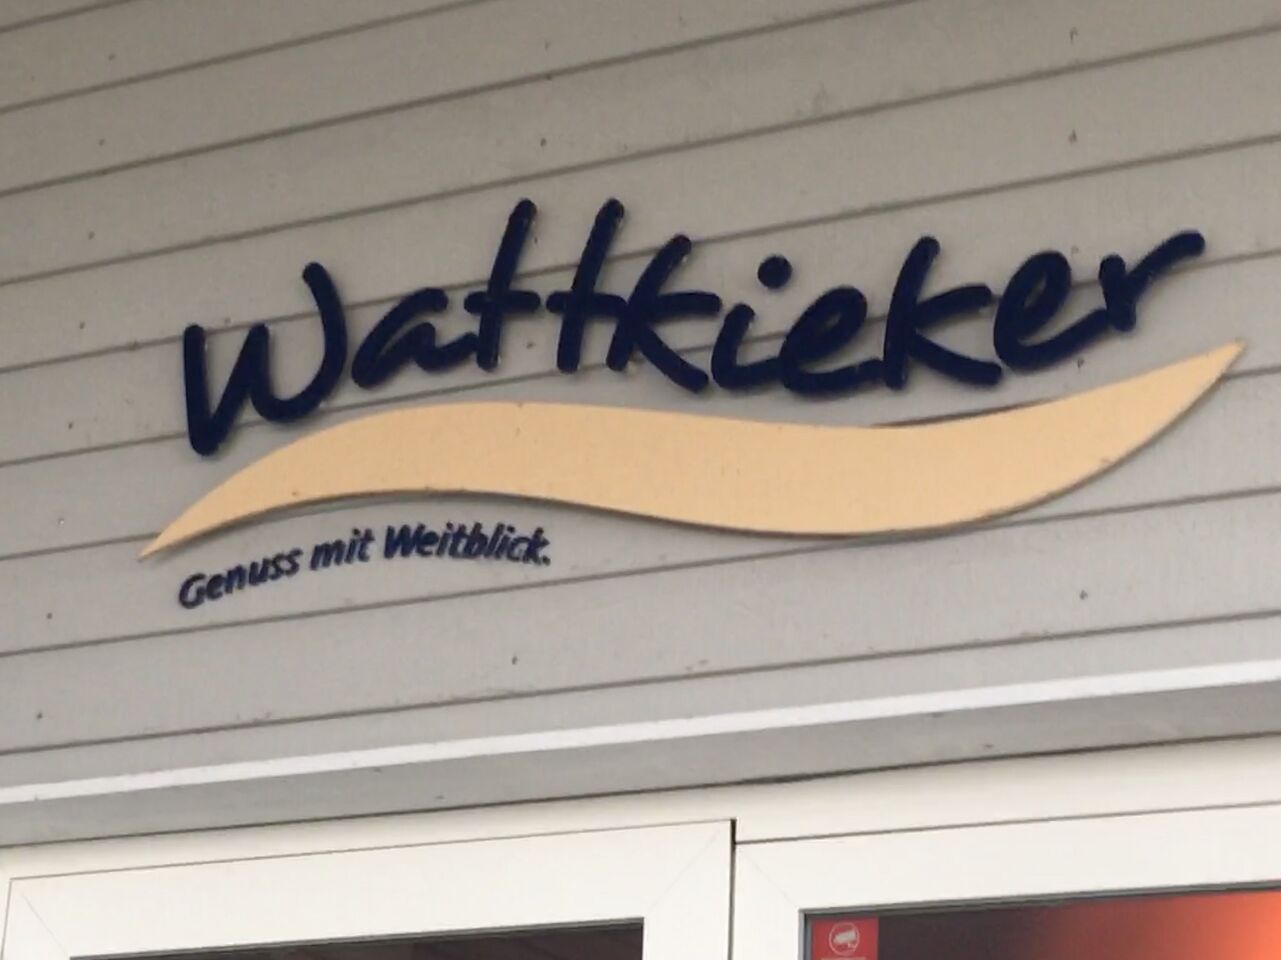 A photo of Wattkieker